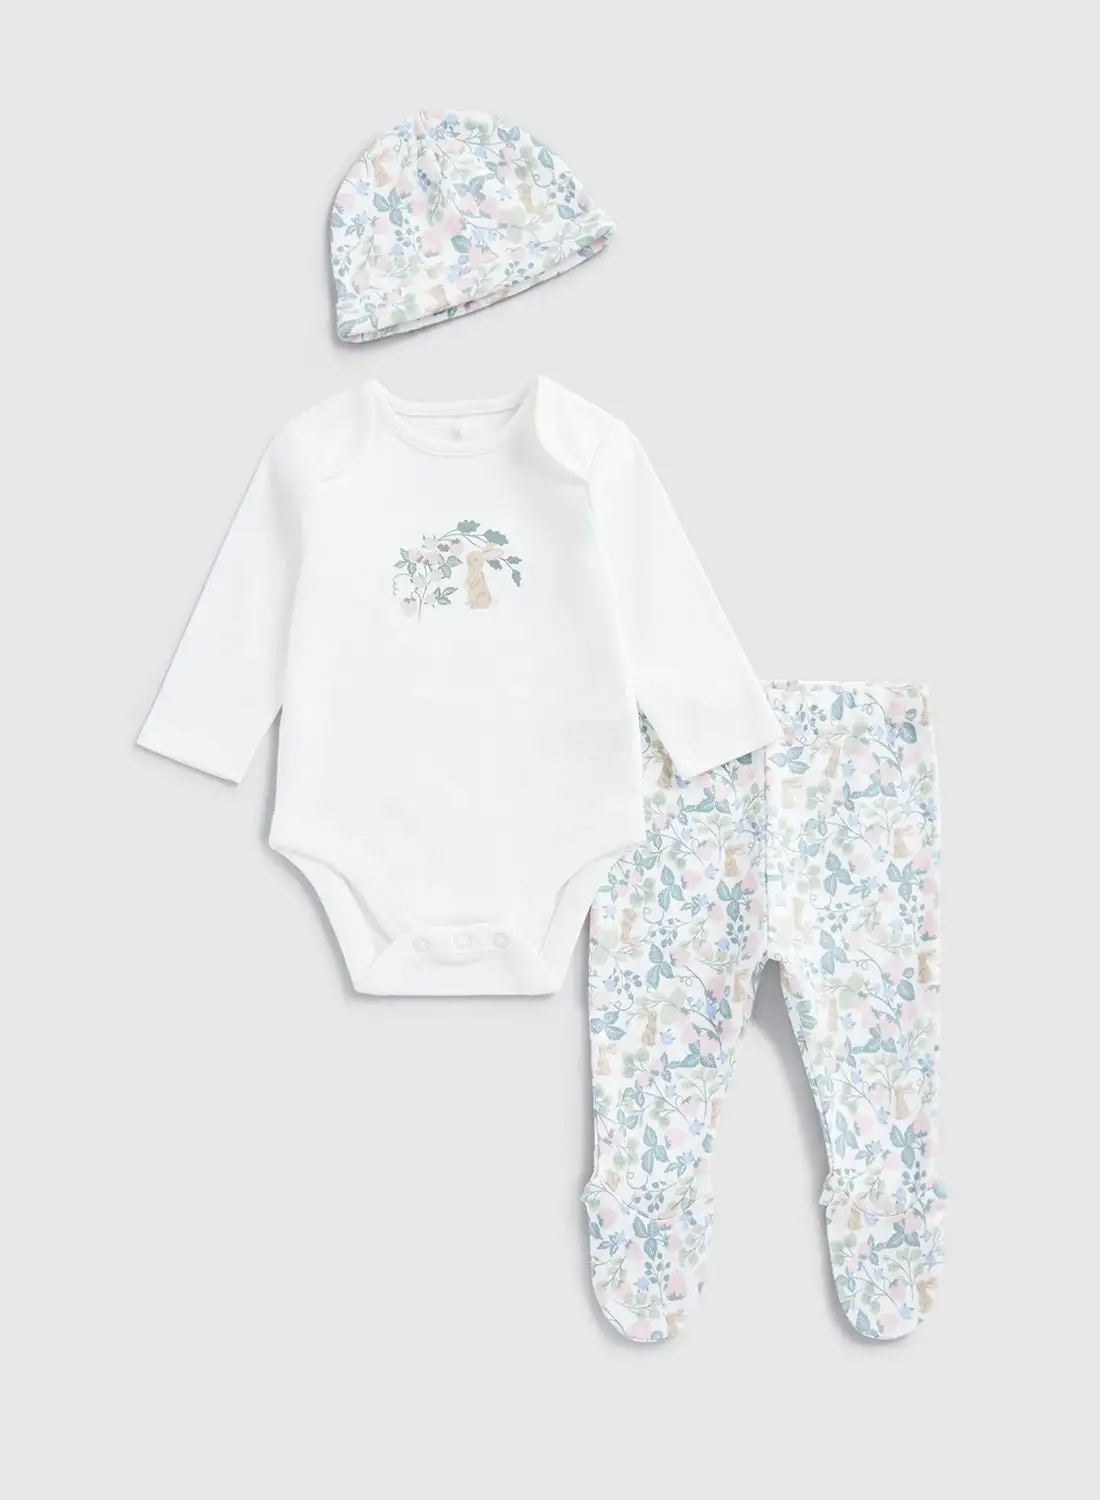 mothercare Infant 3 Pack Gift Set